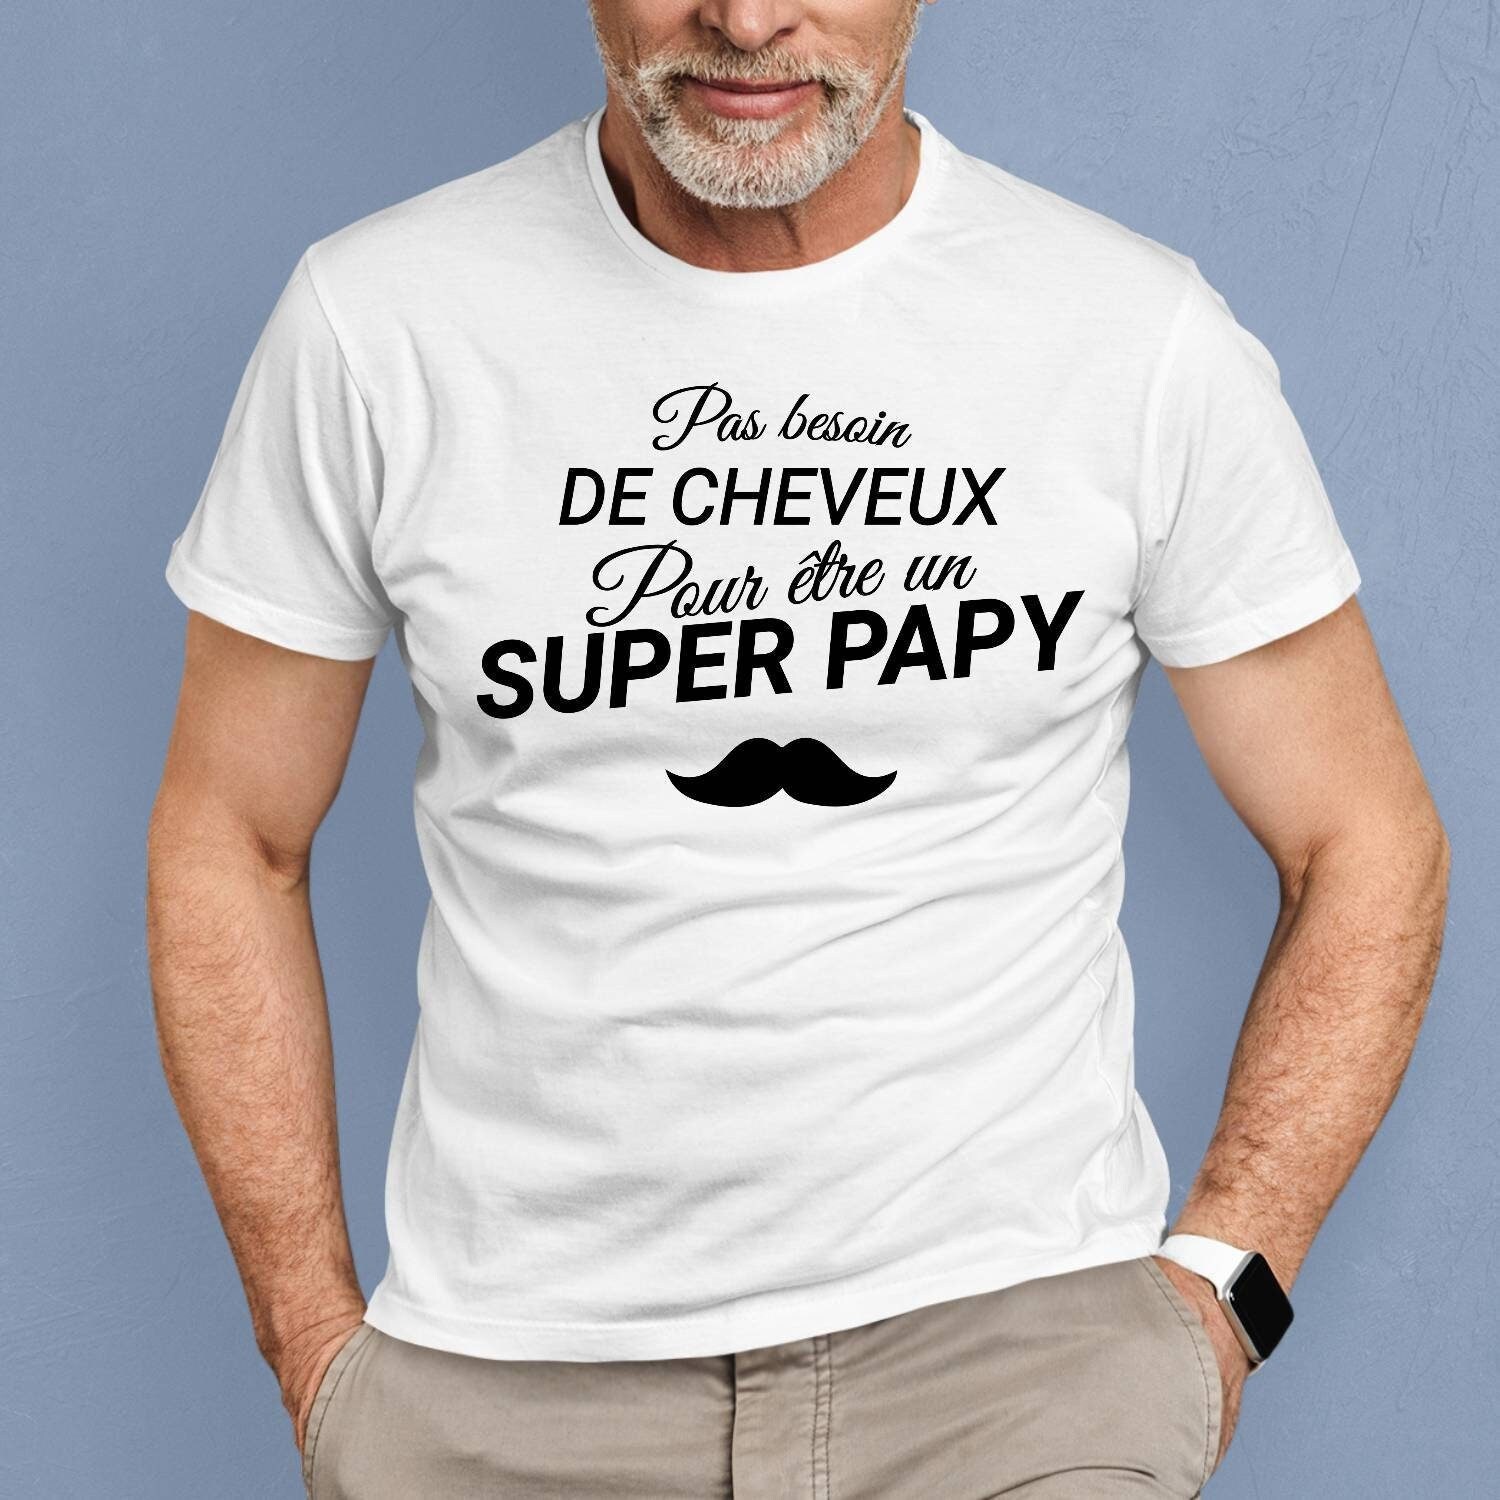 T-shirt humoristique Super Papa Premium L - 17,91 €